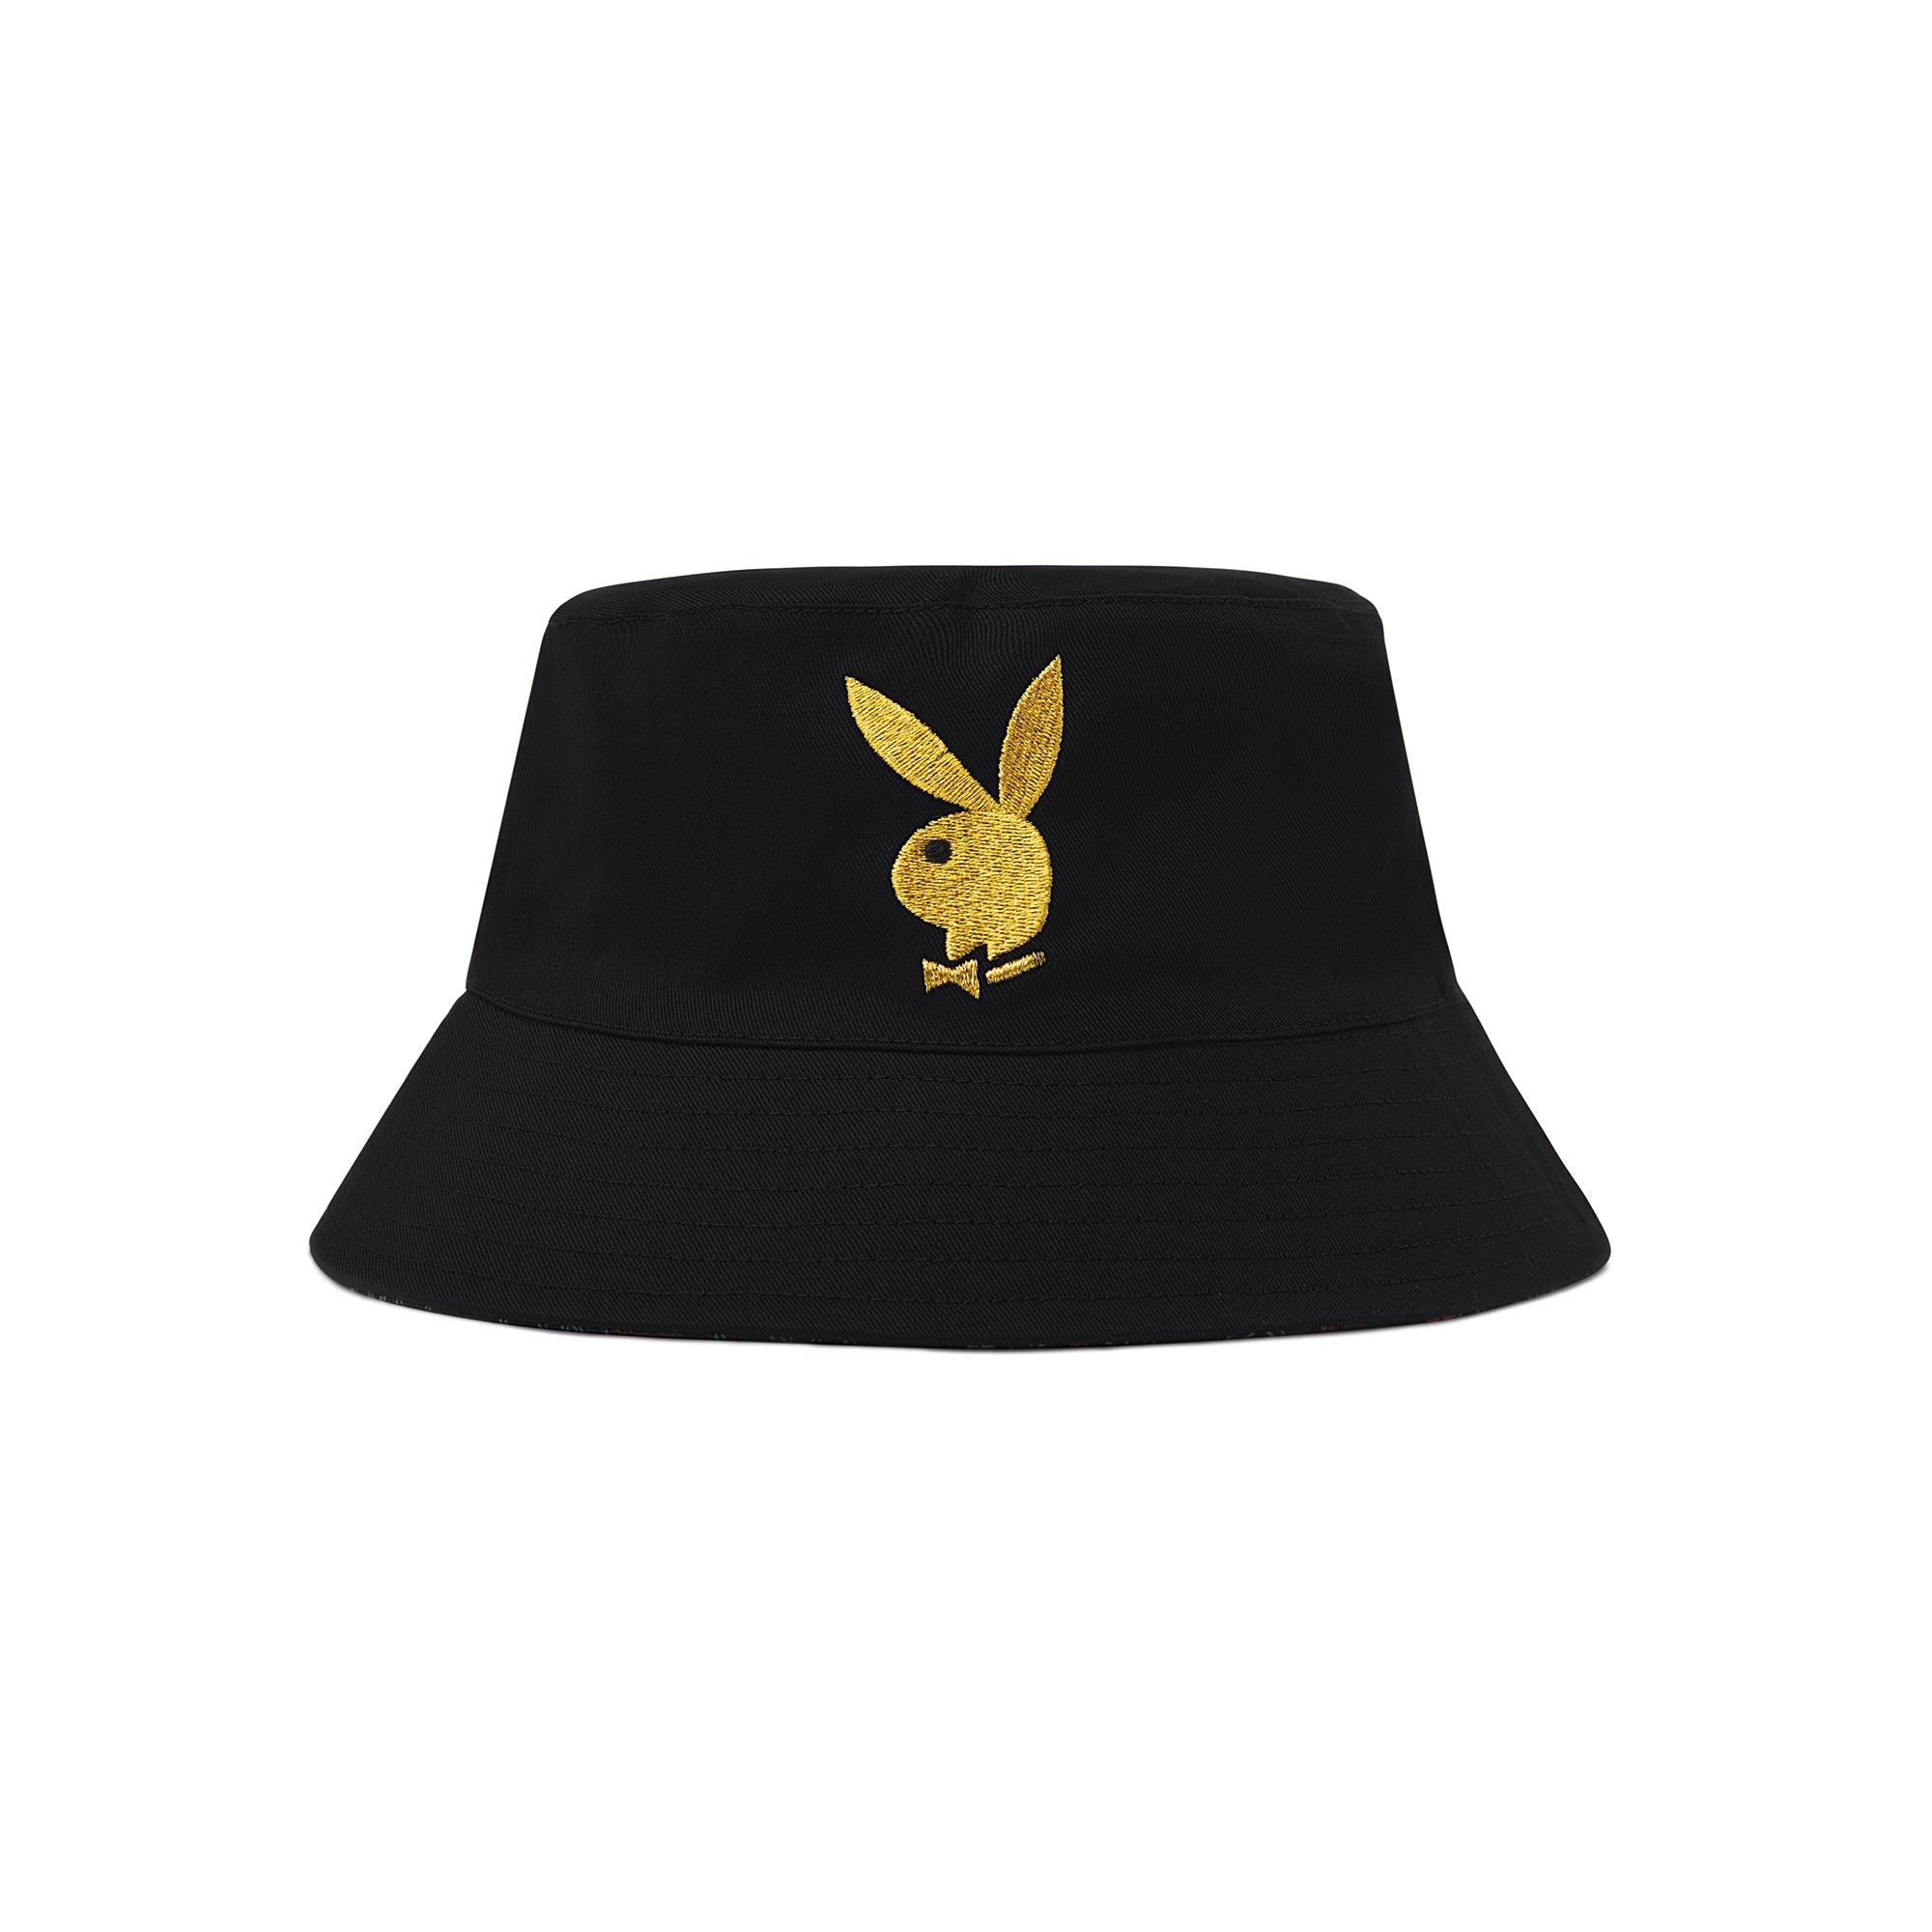 Playboy x Lids Year of the Rabbit Bucket Hat